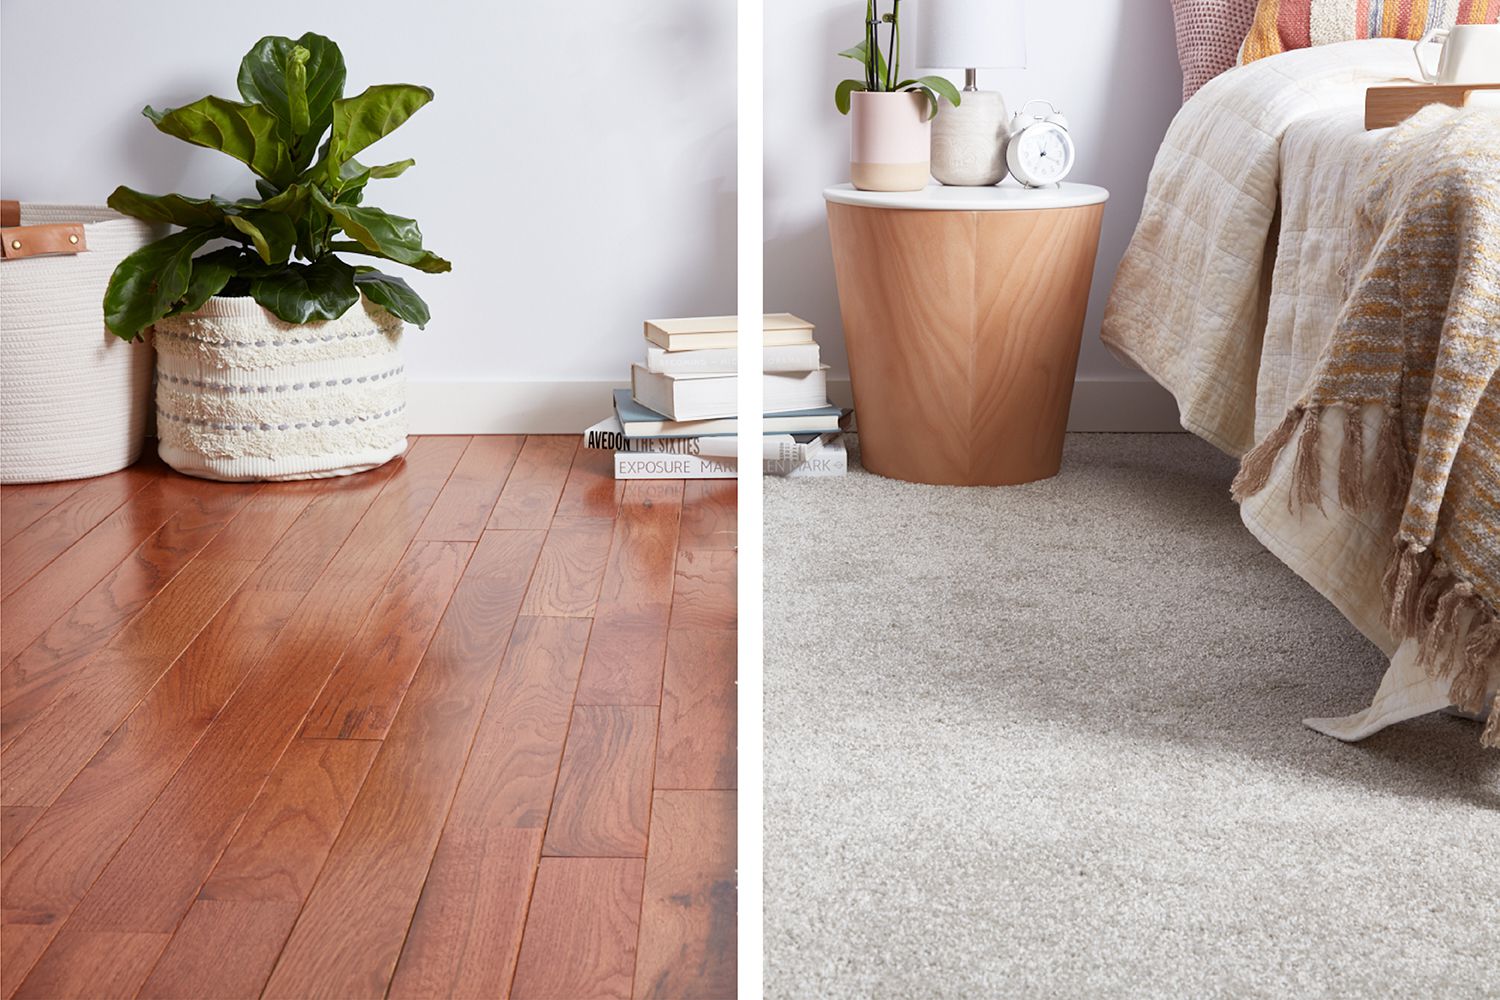 Wooden Floor Or Carpet For Living Room